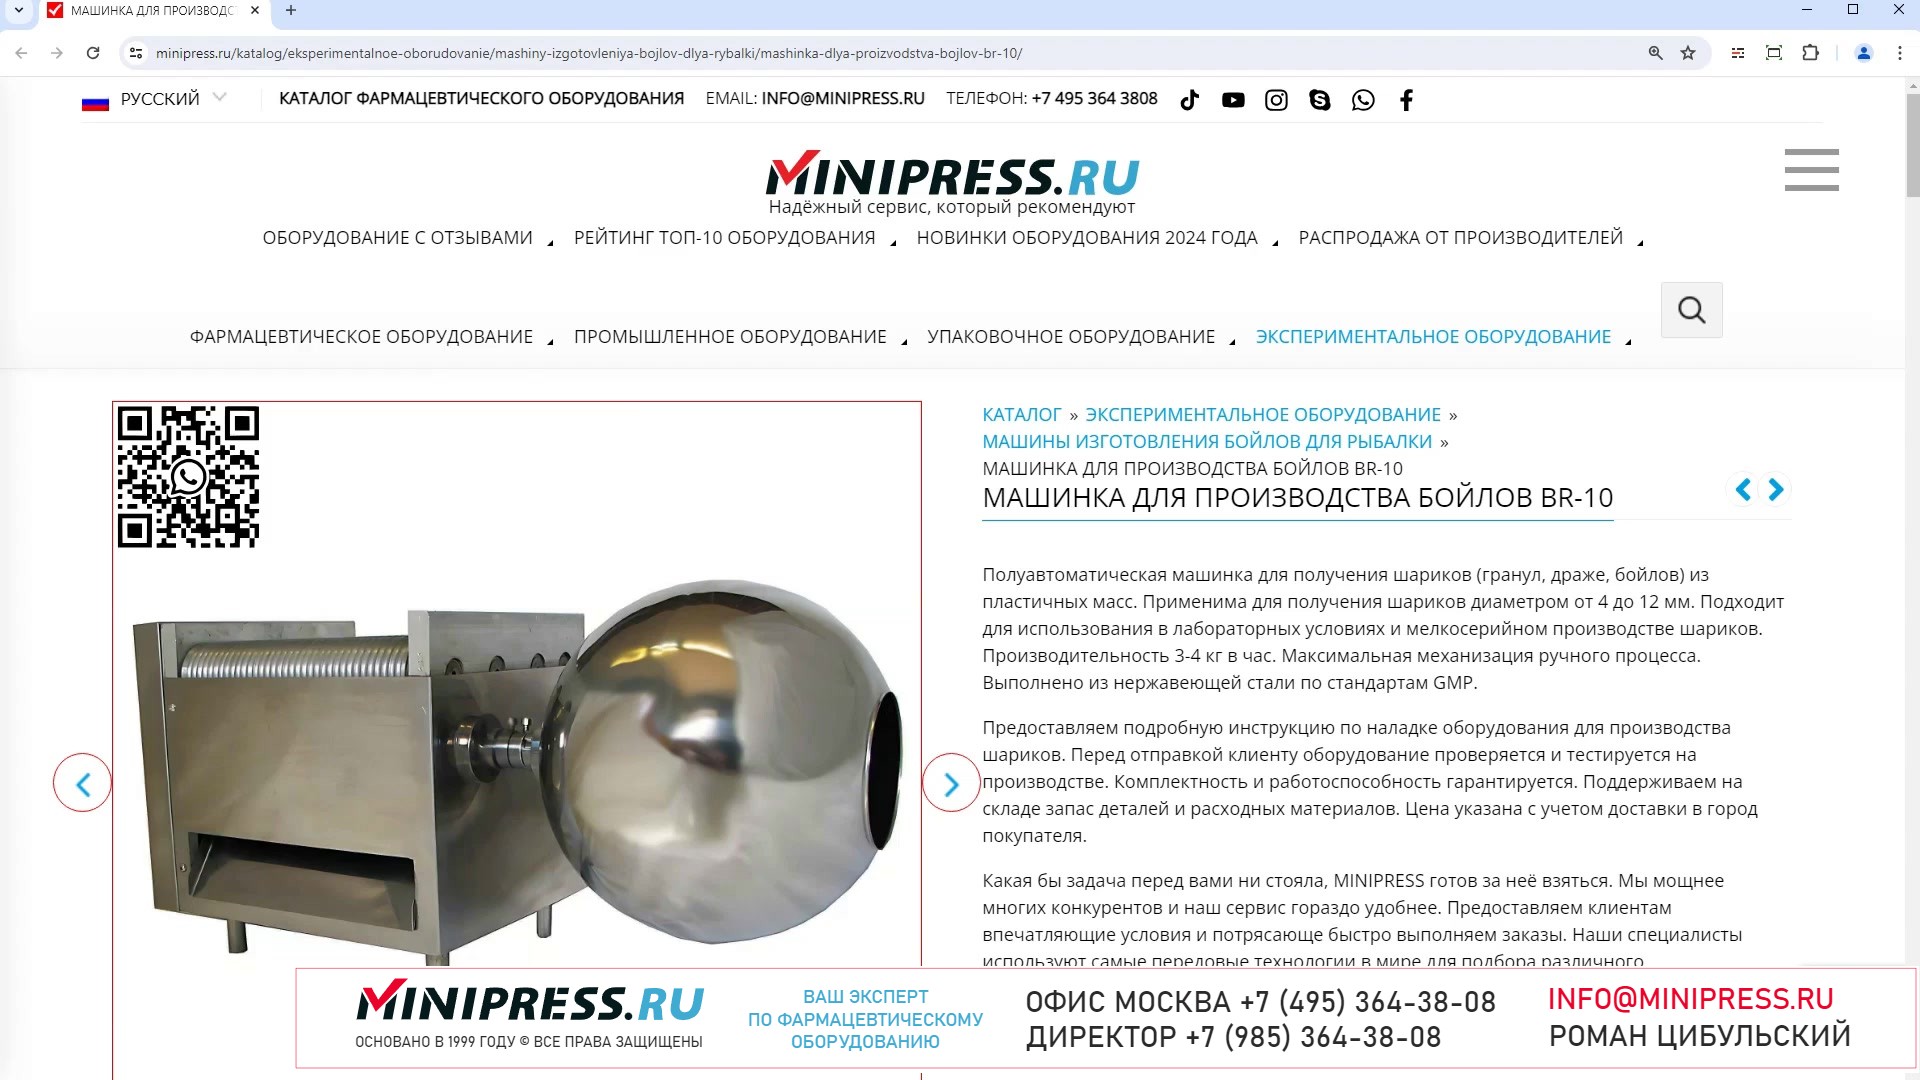 Minipress.ru Машинка для производства бойлов BR-10